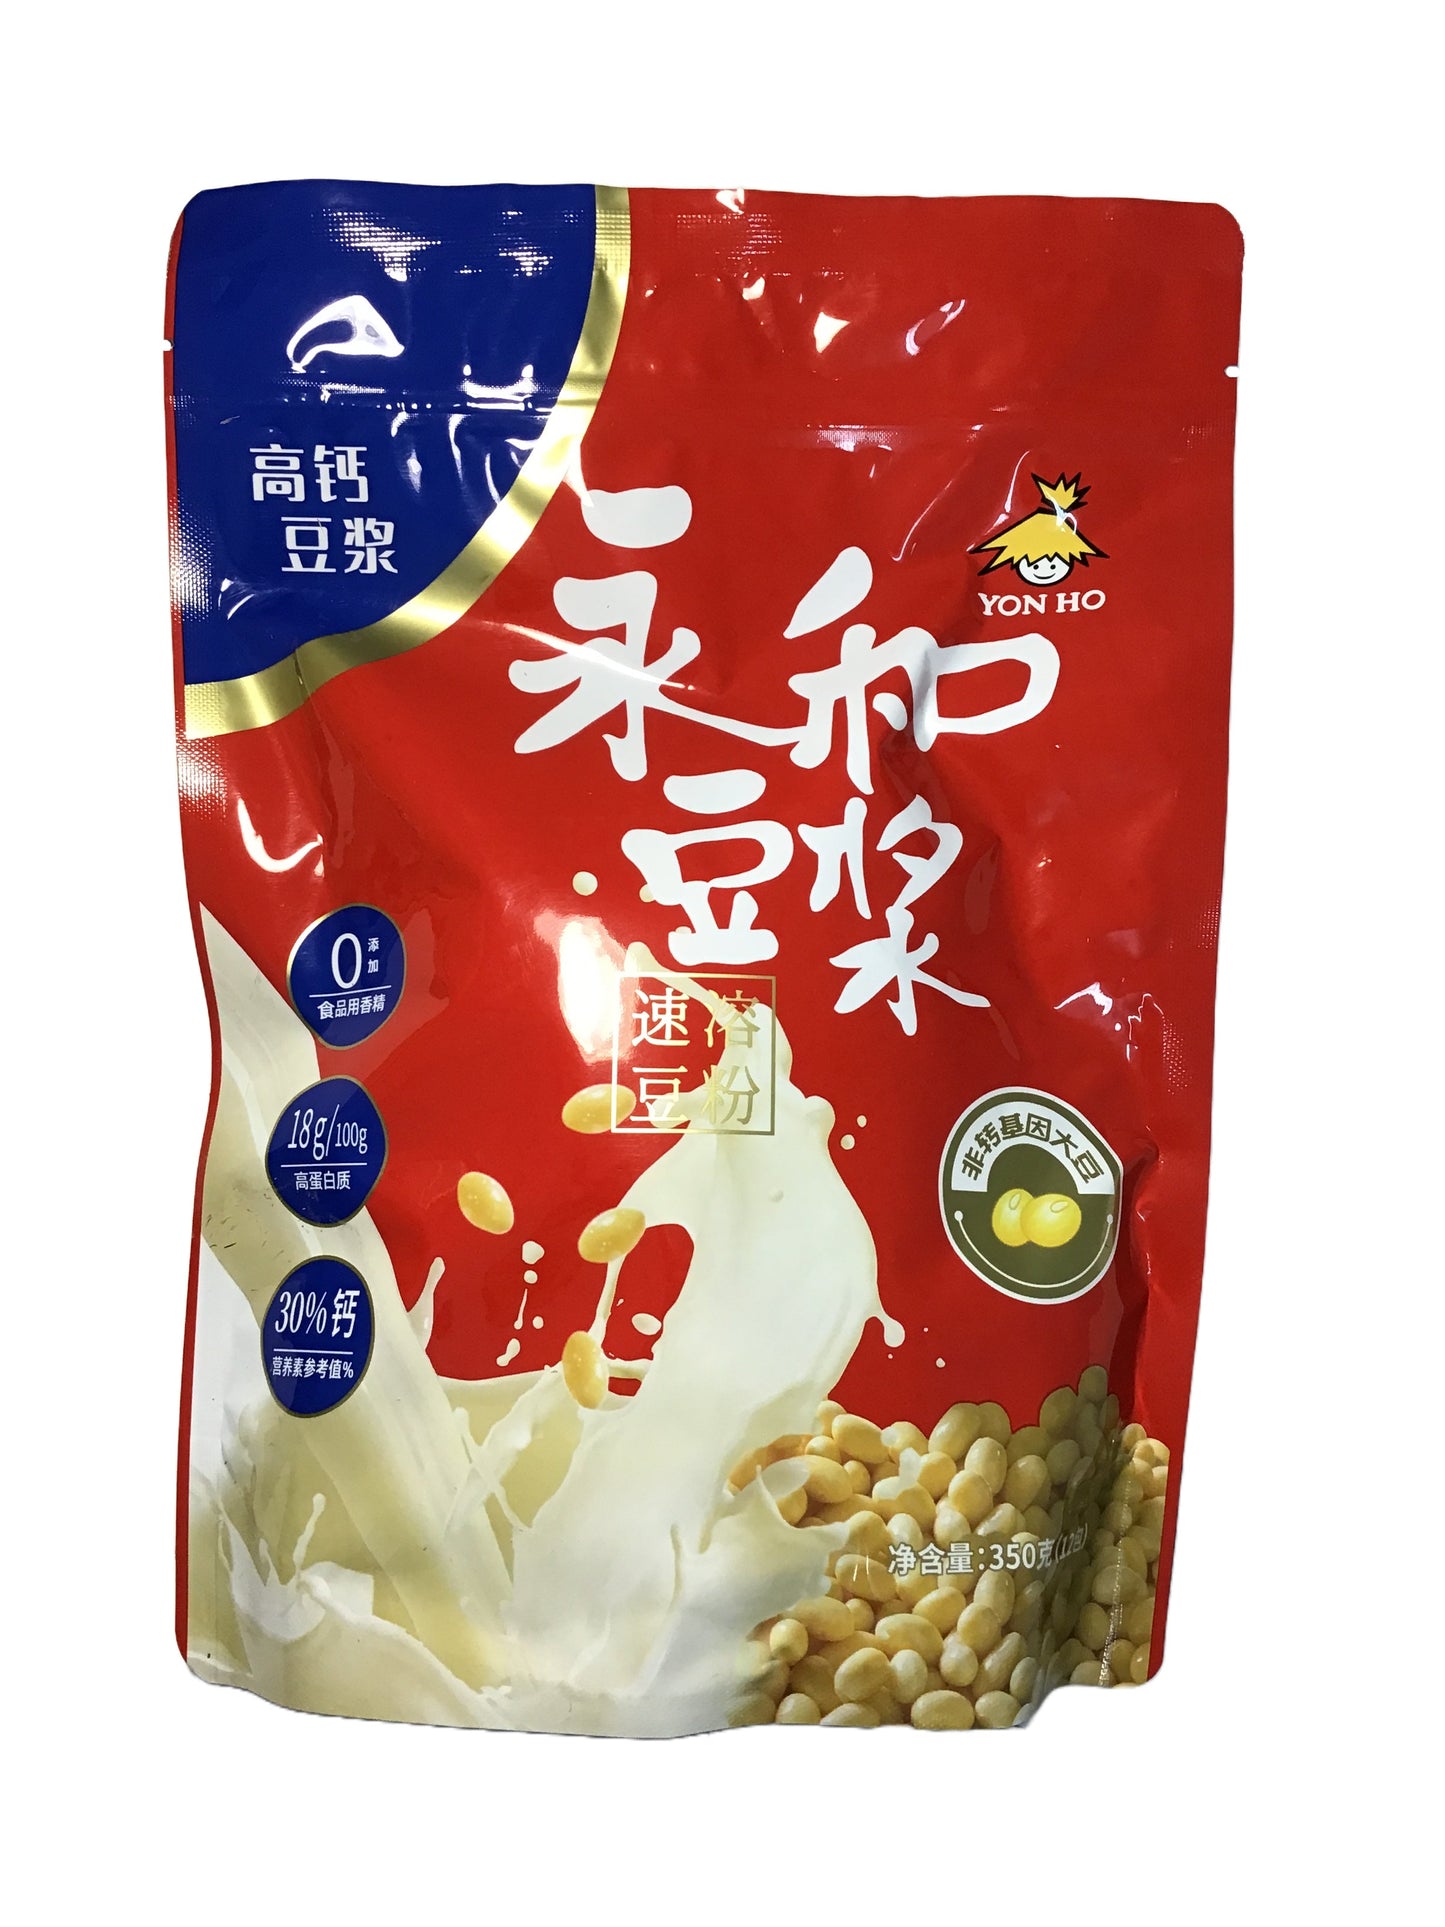 Yon Ho Soybean Powder (Calcium Carbonate) 永和 高钙豆浆粉 (12 sachets) 350g